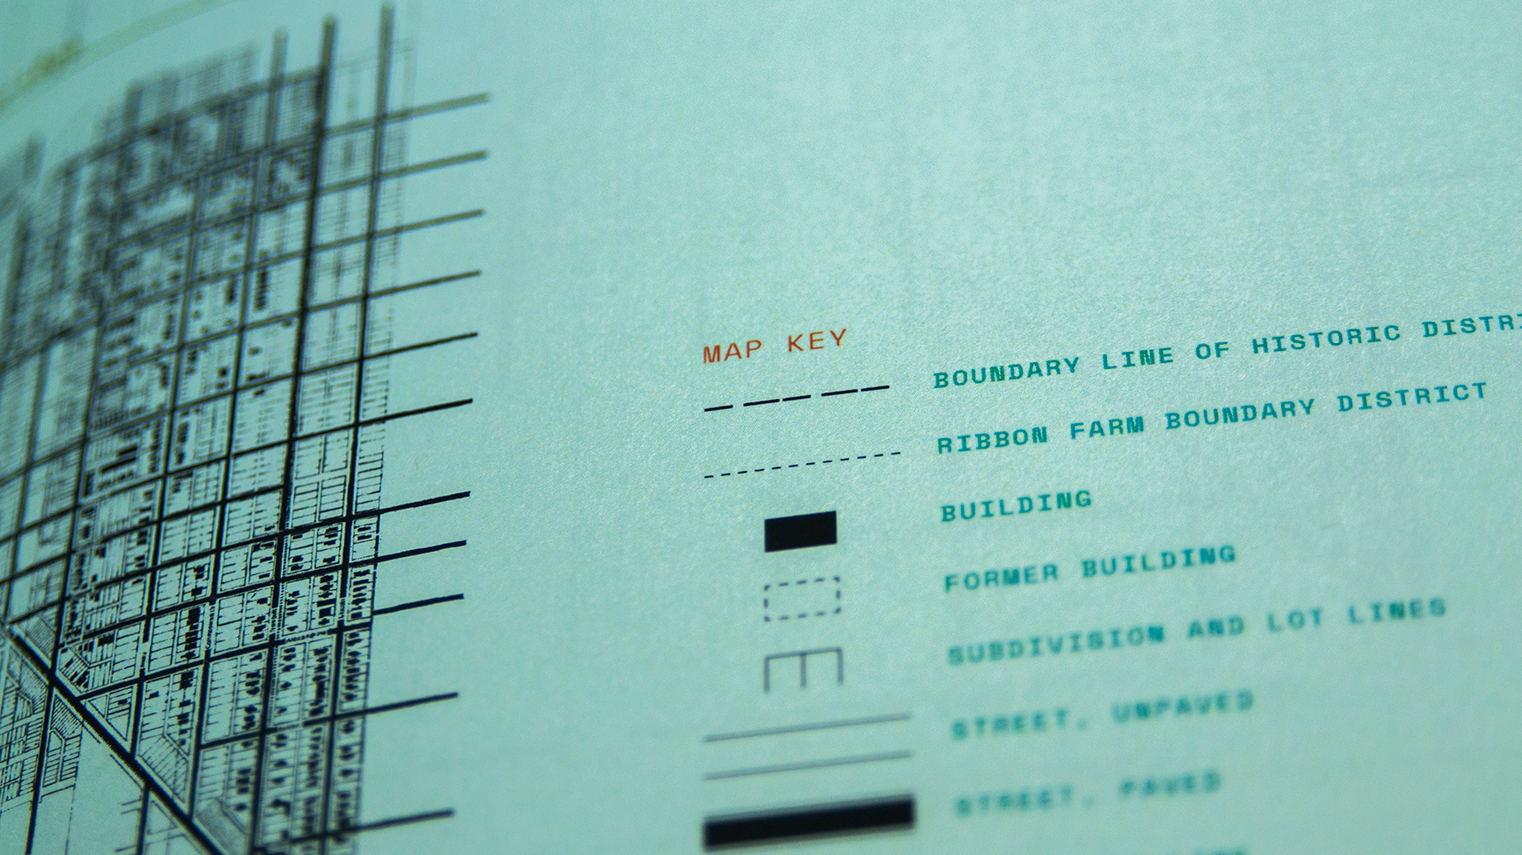 Detail of neighborhood maps with typographic key